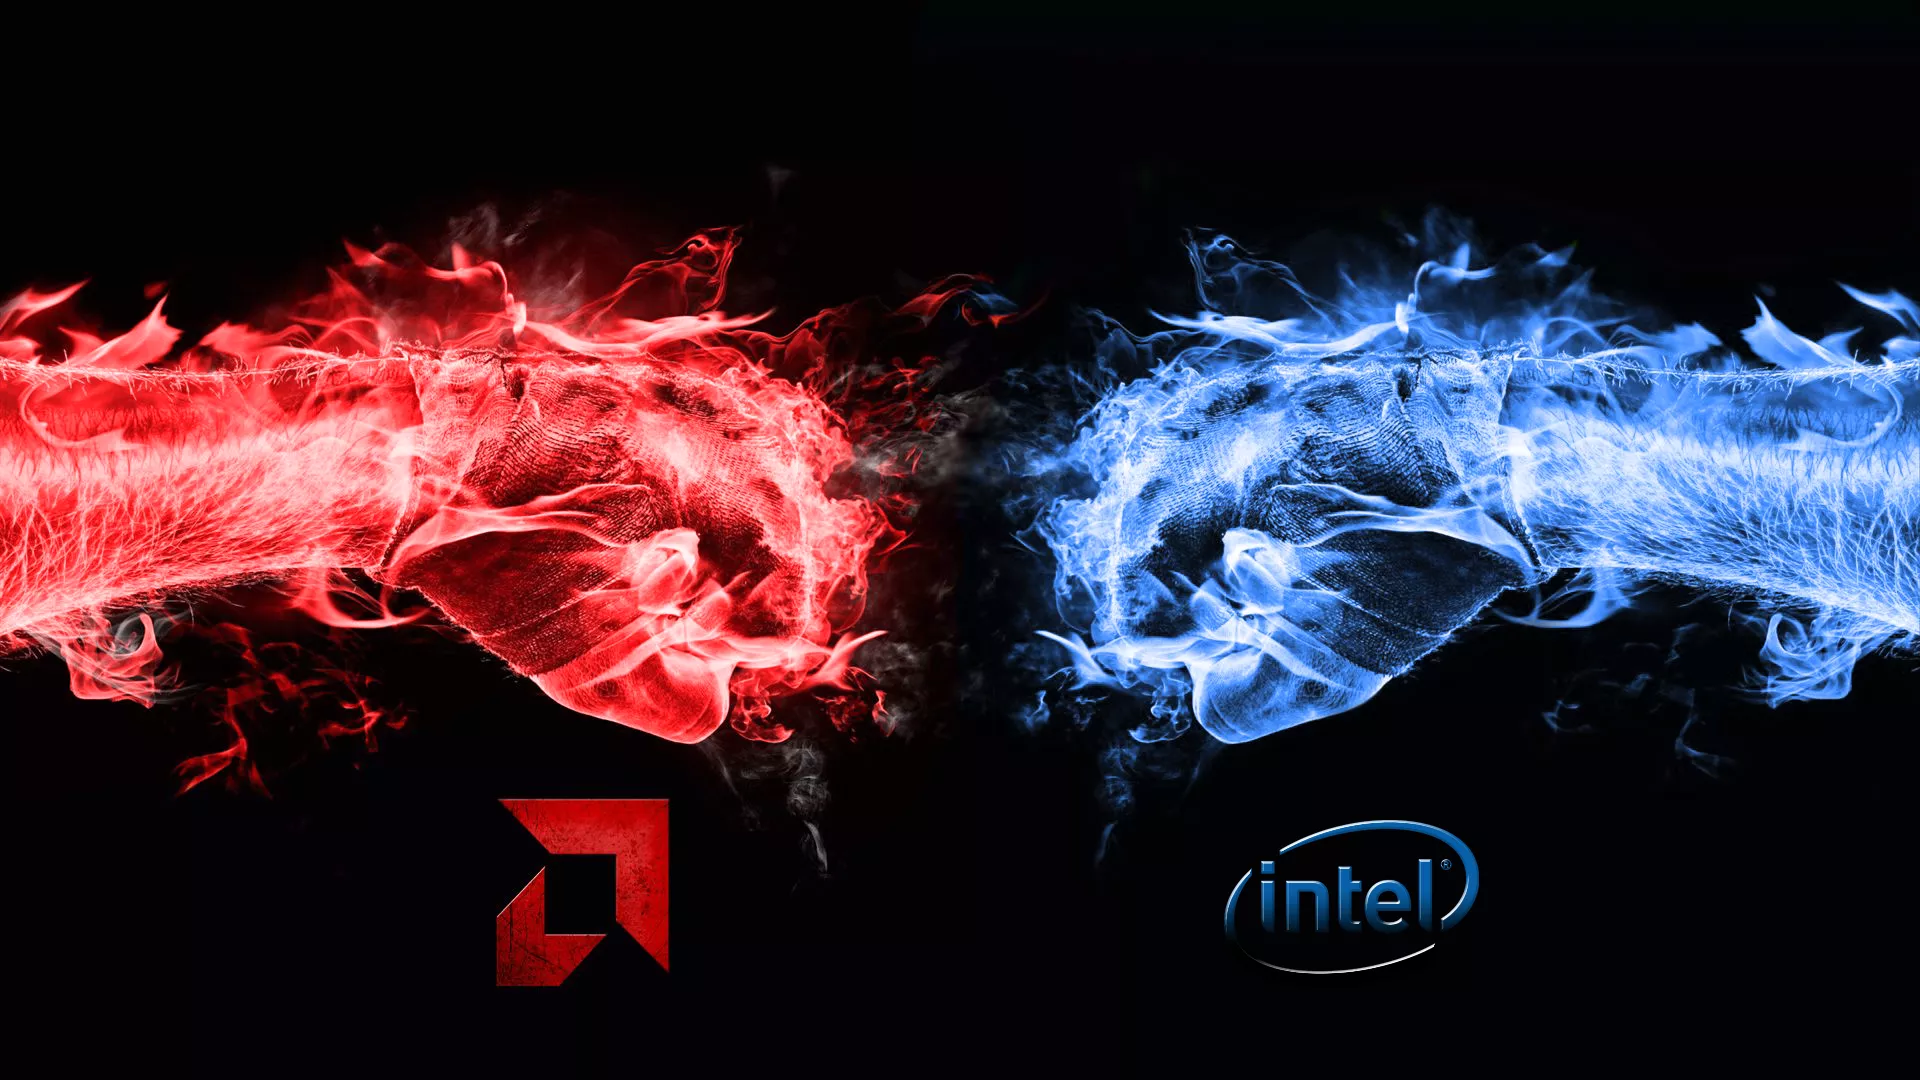 Amd Vs Intel